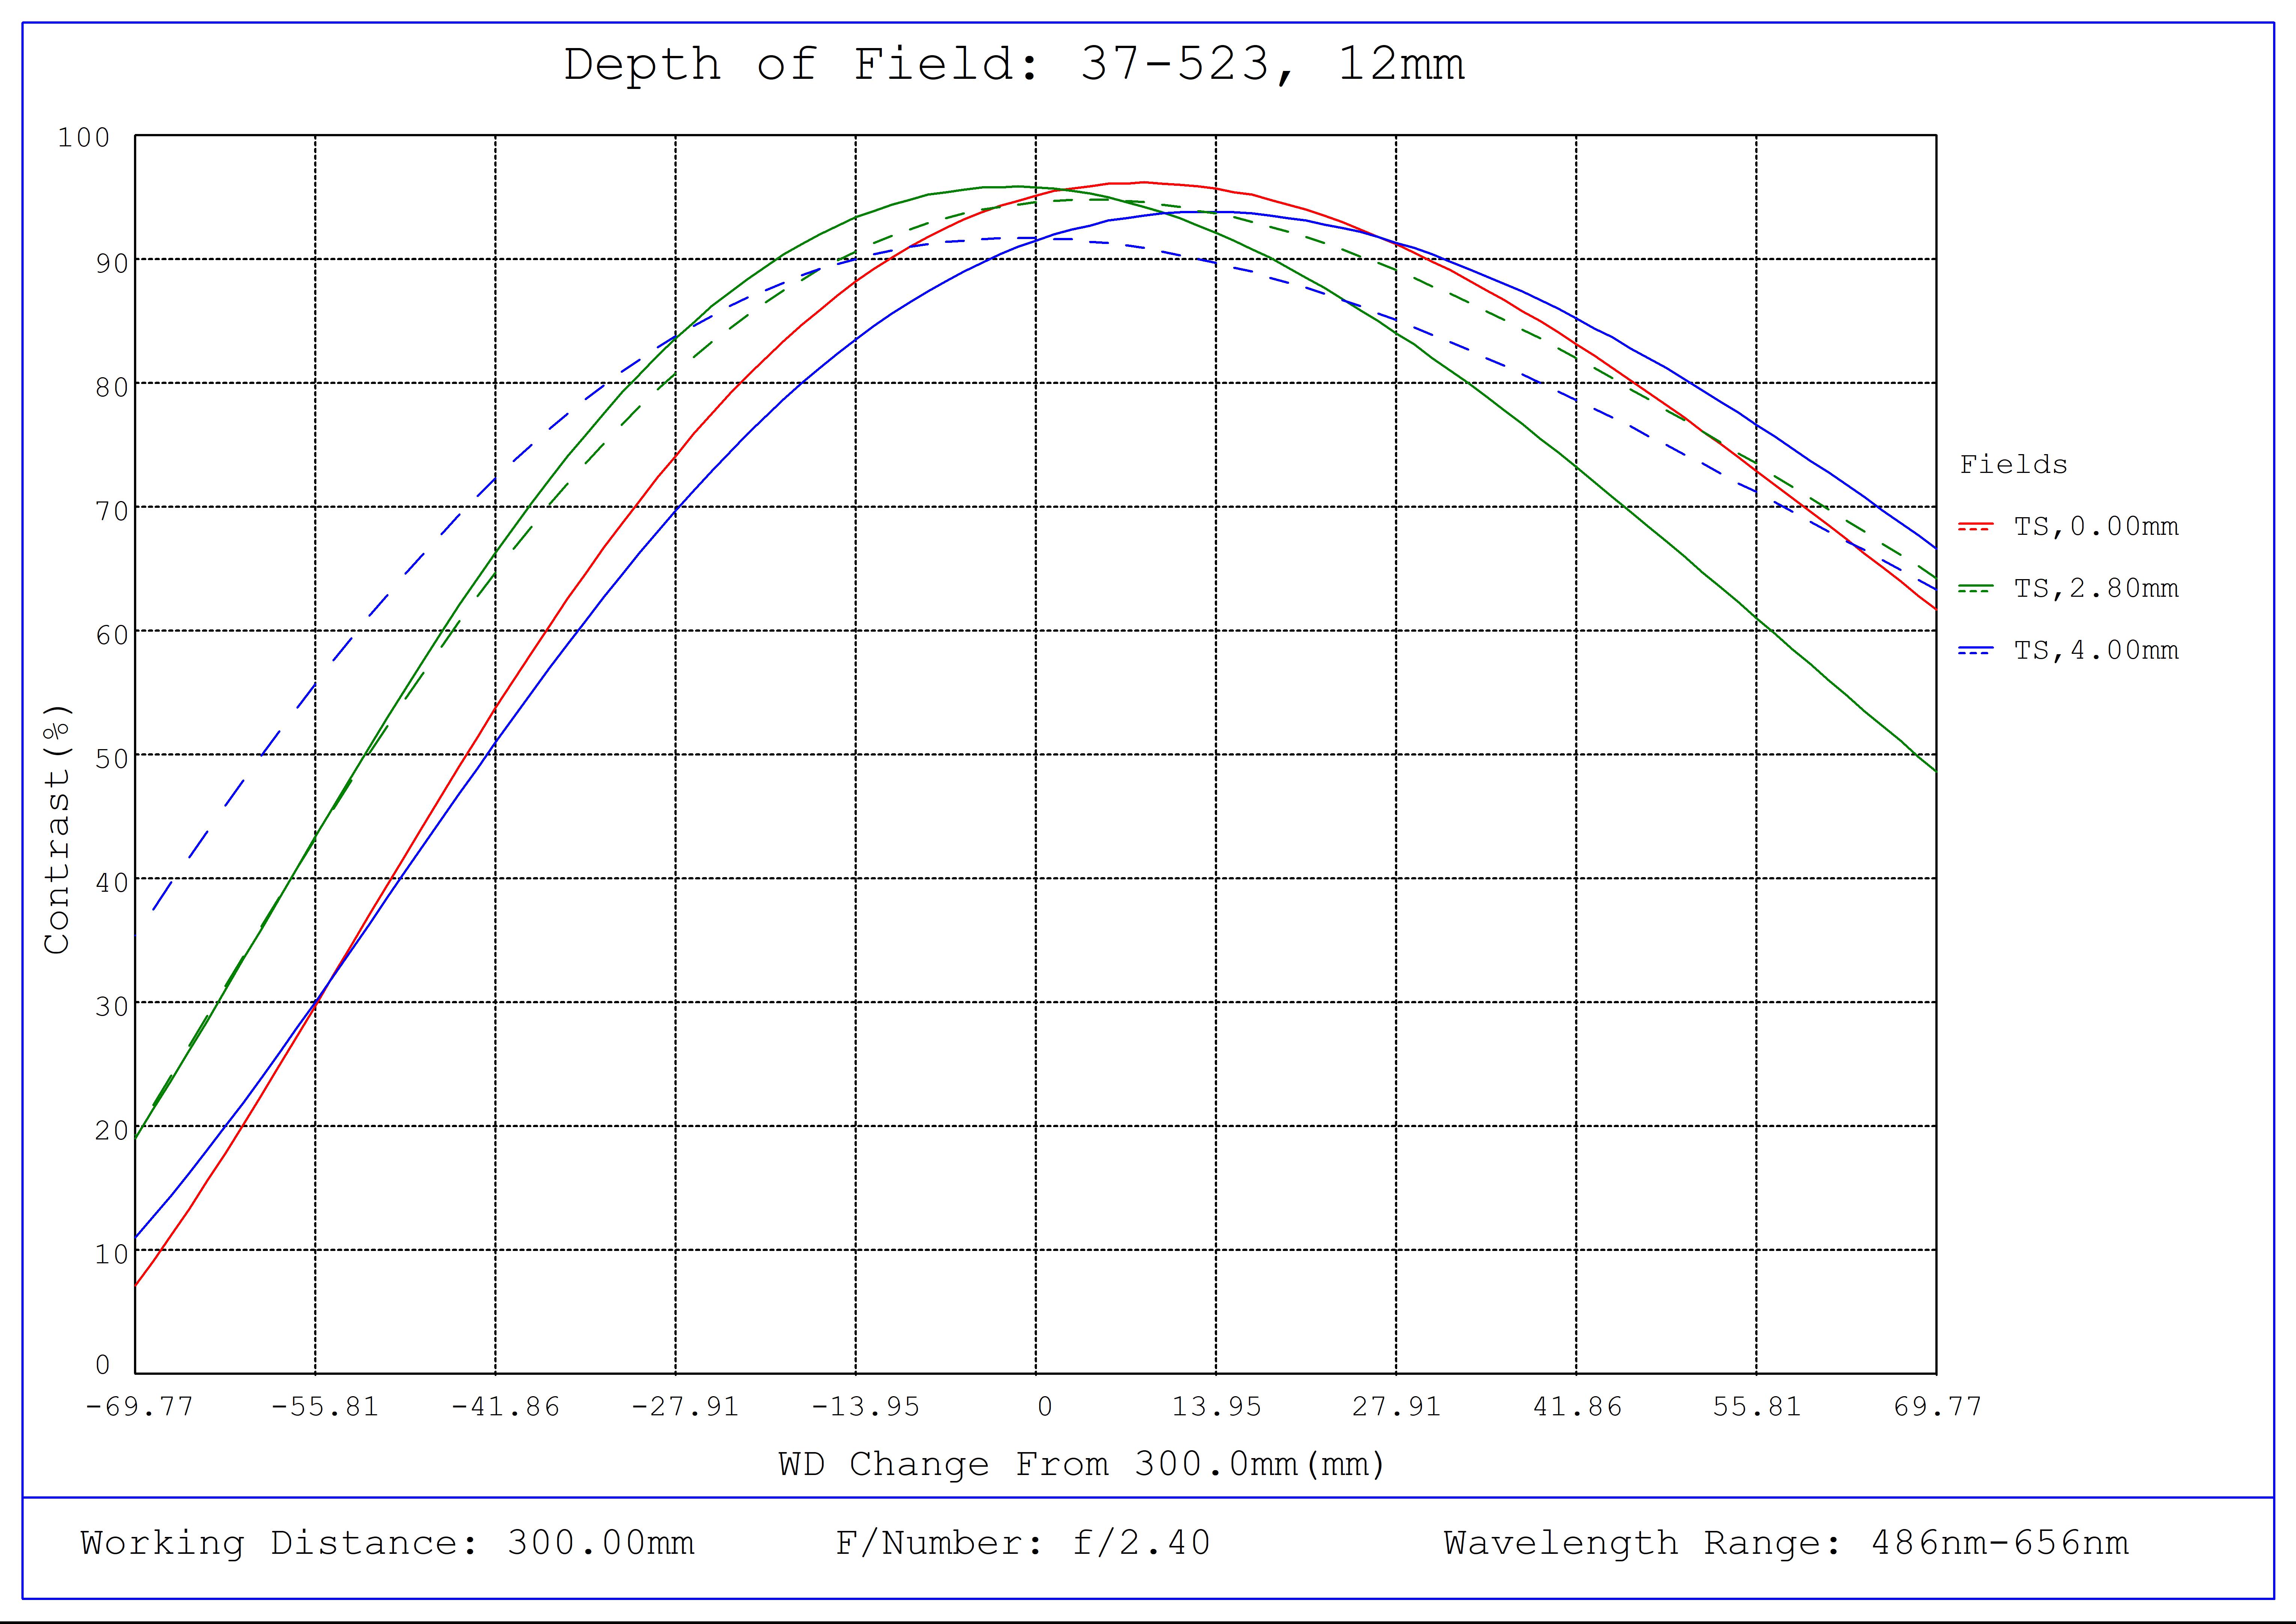 #37-523, 12mm FL, Liquid Lens M12 Lens, Depth of Field Plot, 300mm Working Distance, f2.4